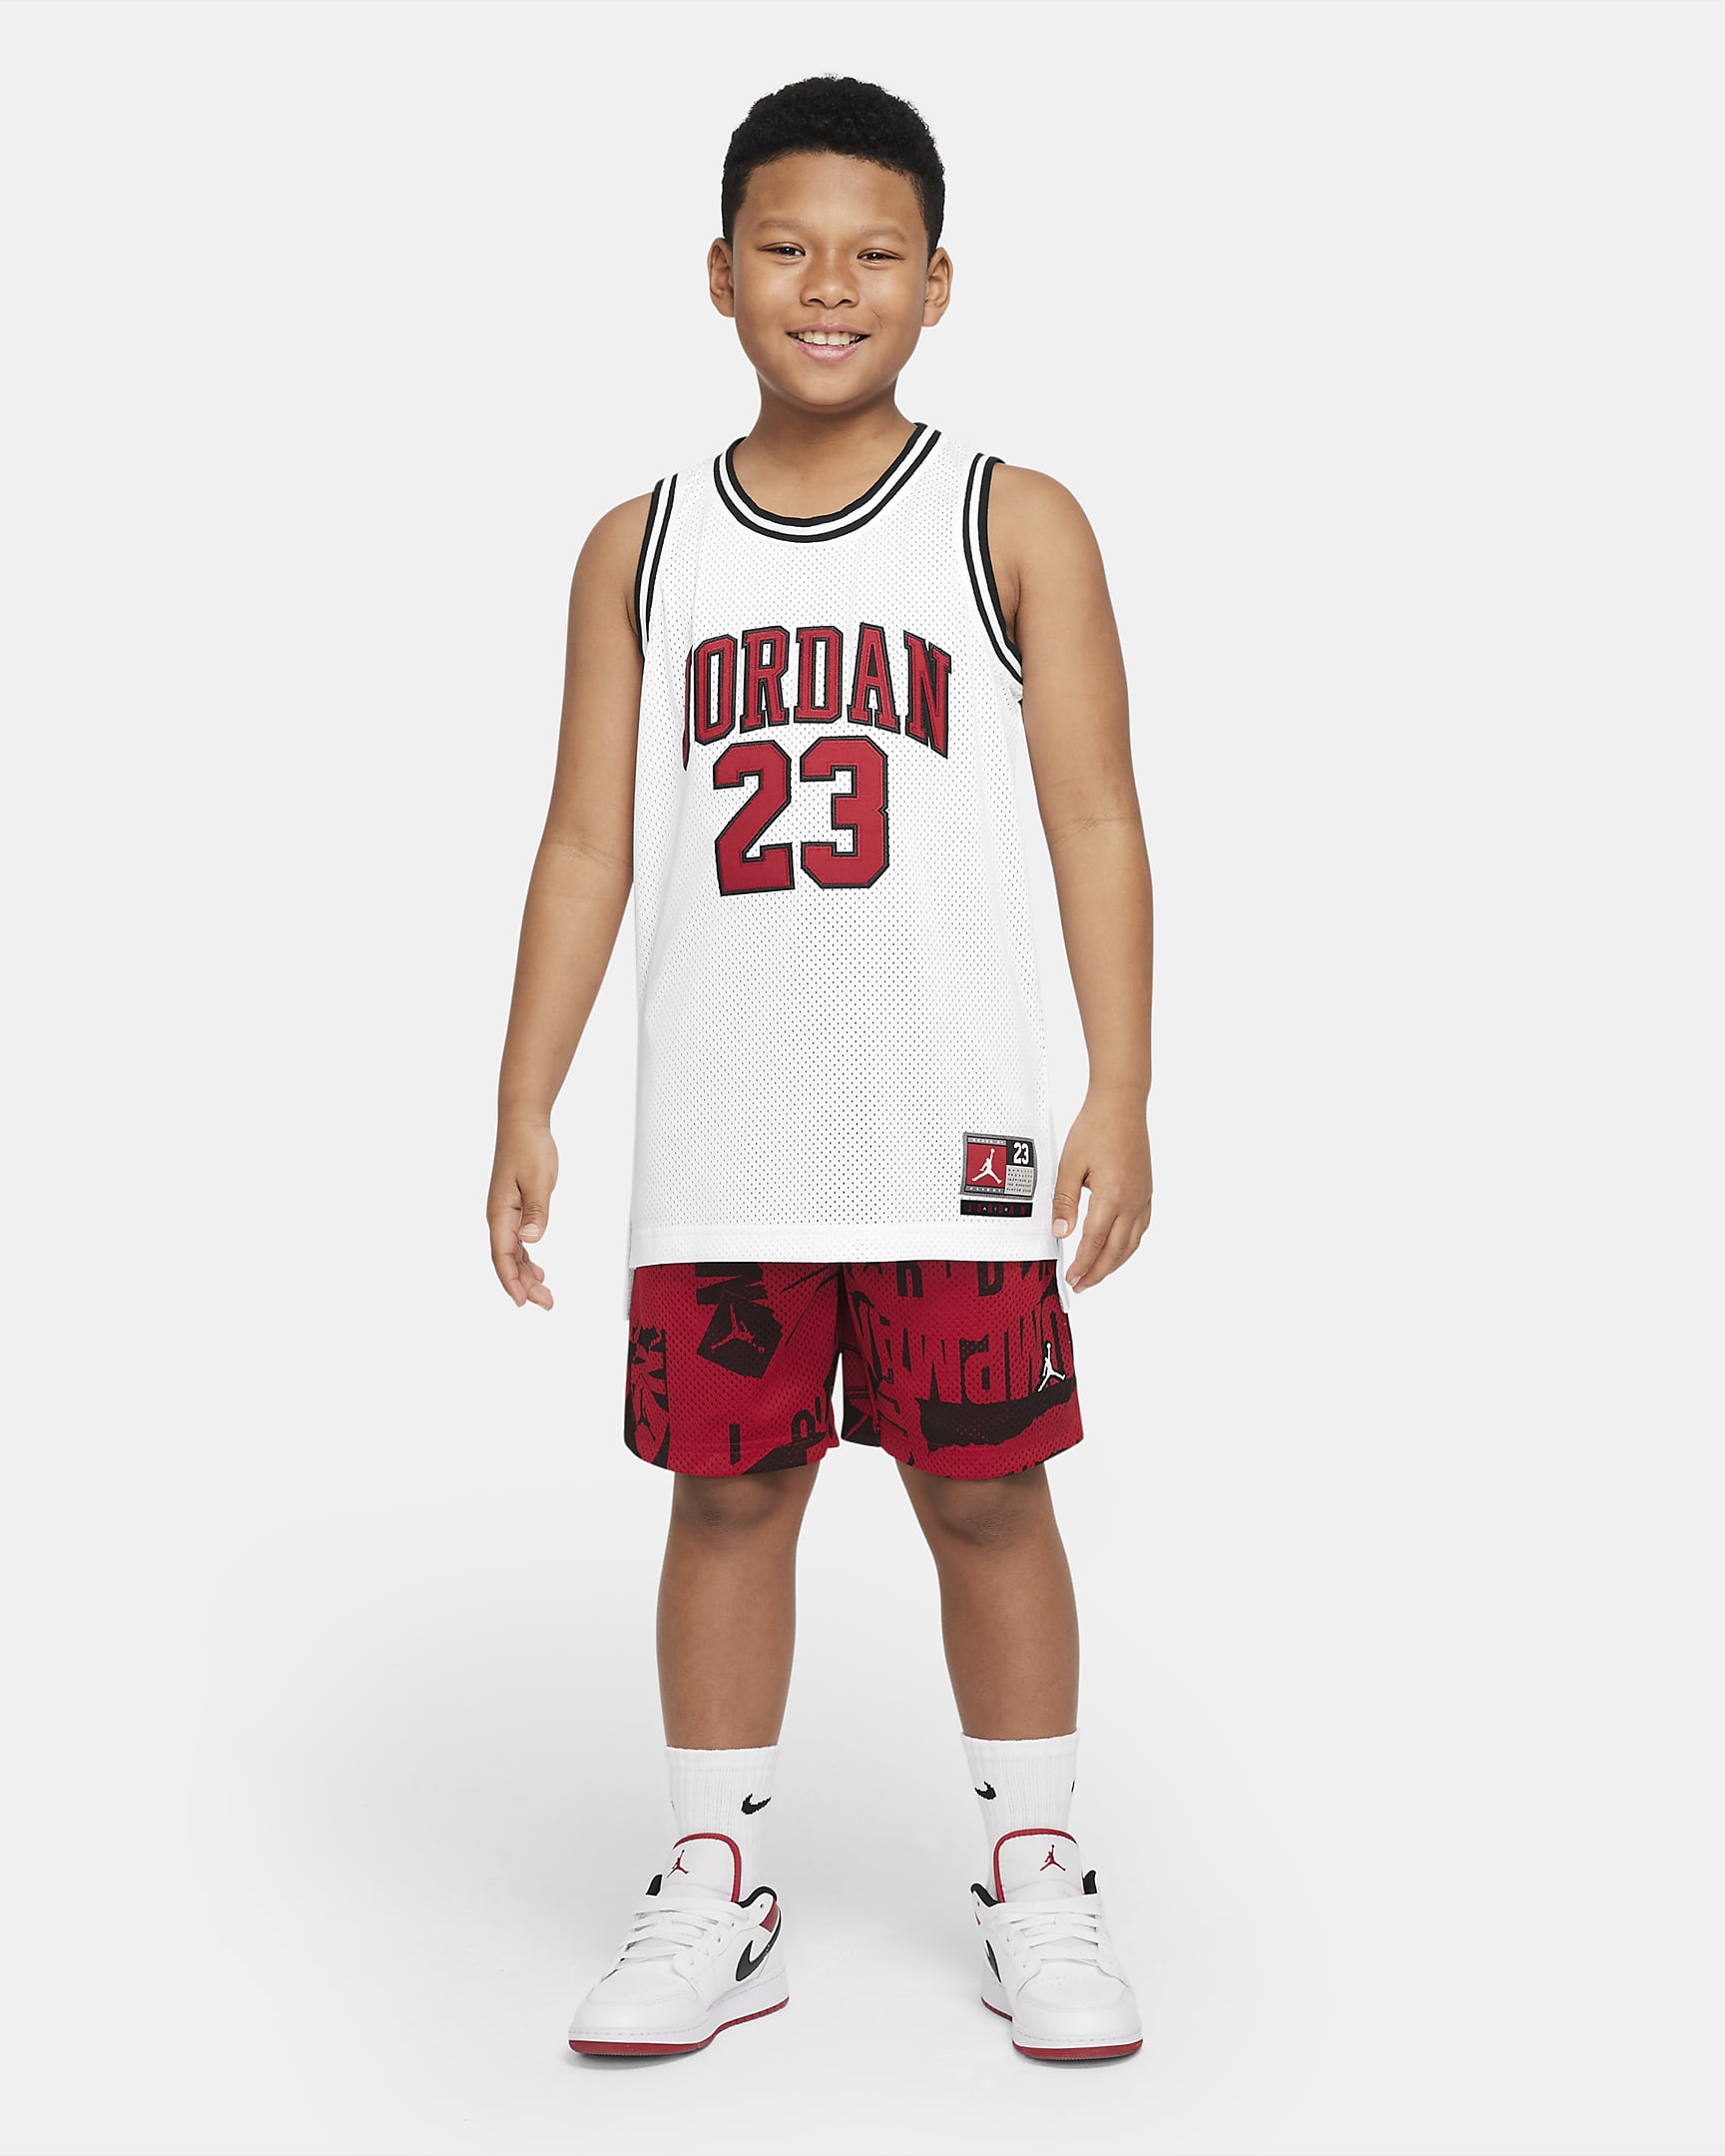 Jordan Big Kids' 23 Jersey. Nike.com